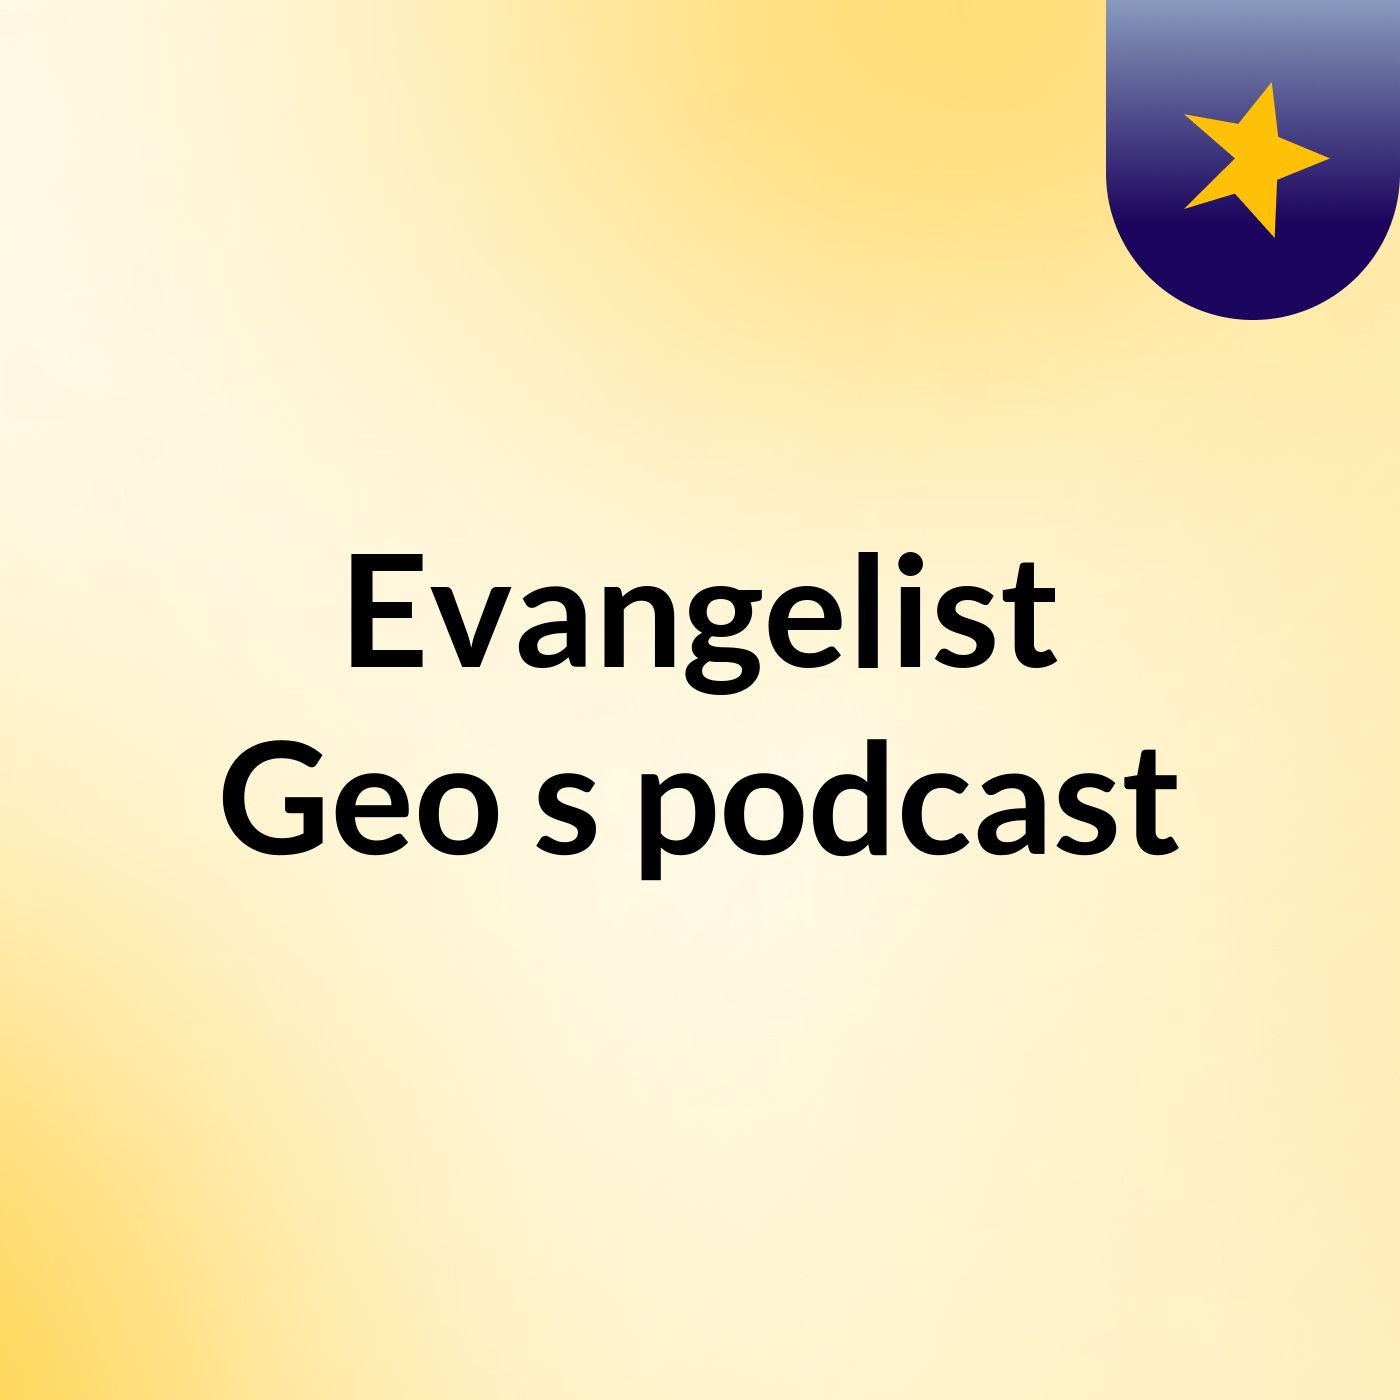 Episode 2 - Evangelist Geo's podcast